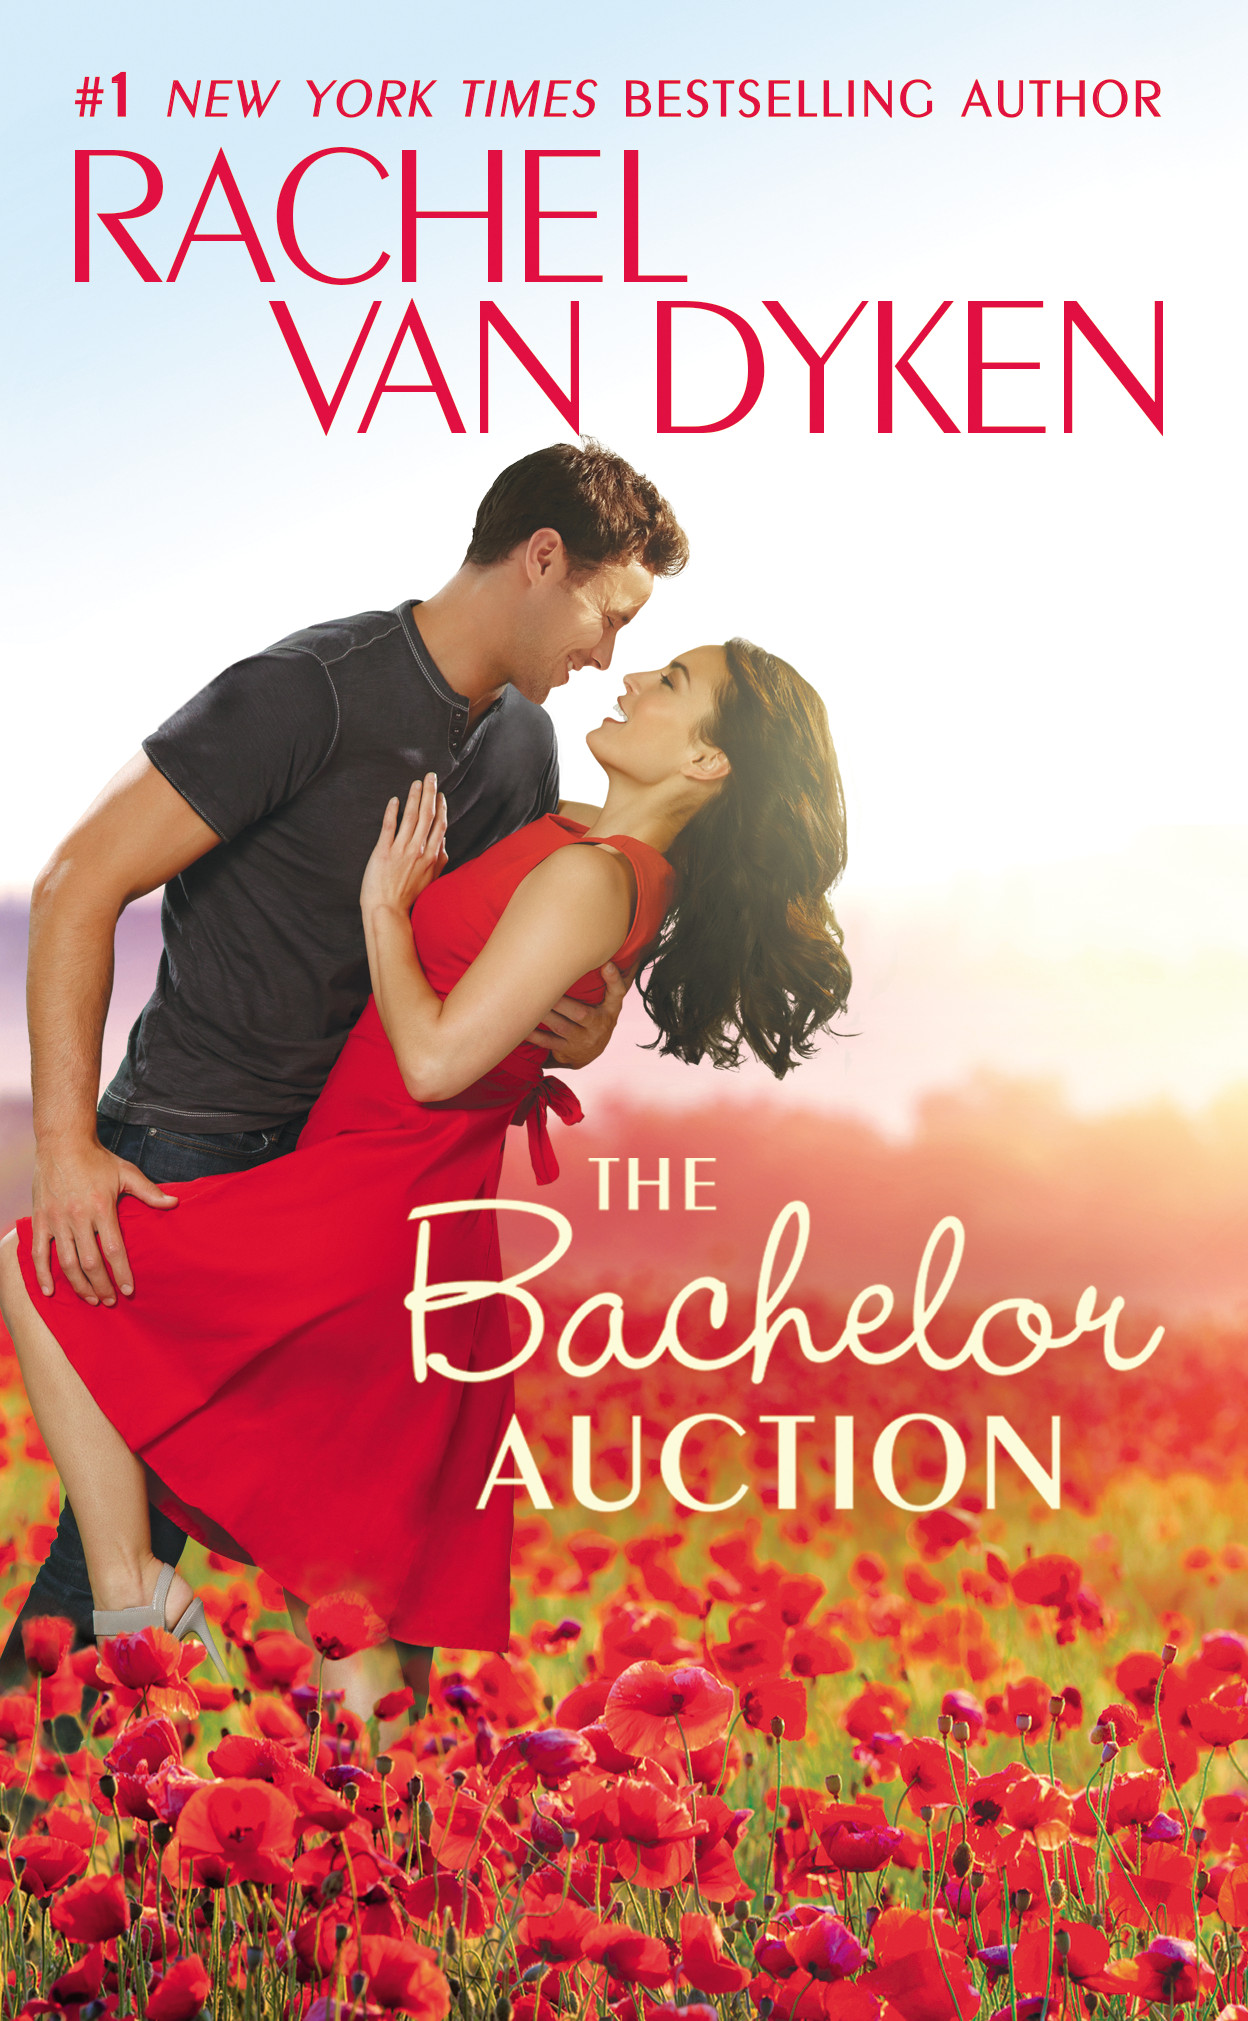 The Bachelor Auction by Rachel Van Dyken Release Blitz